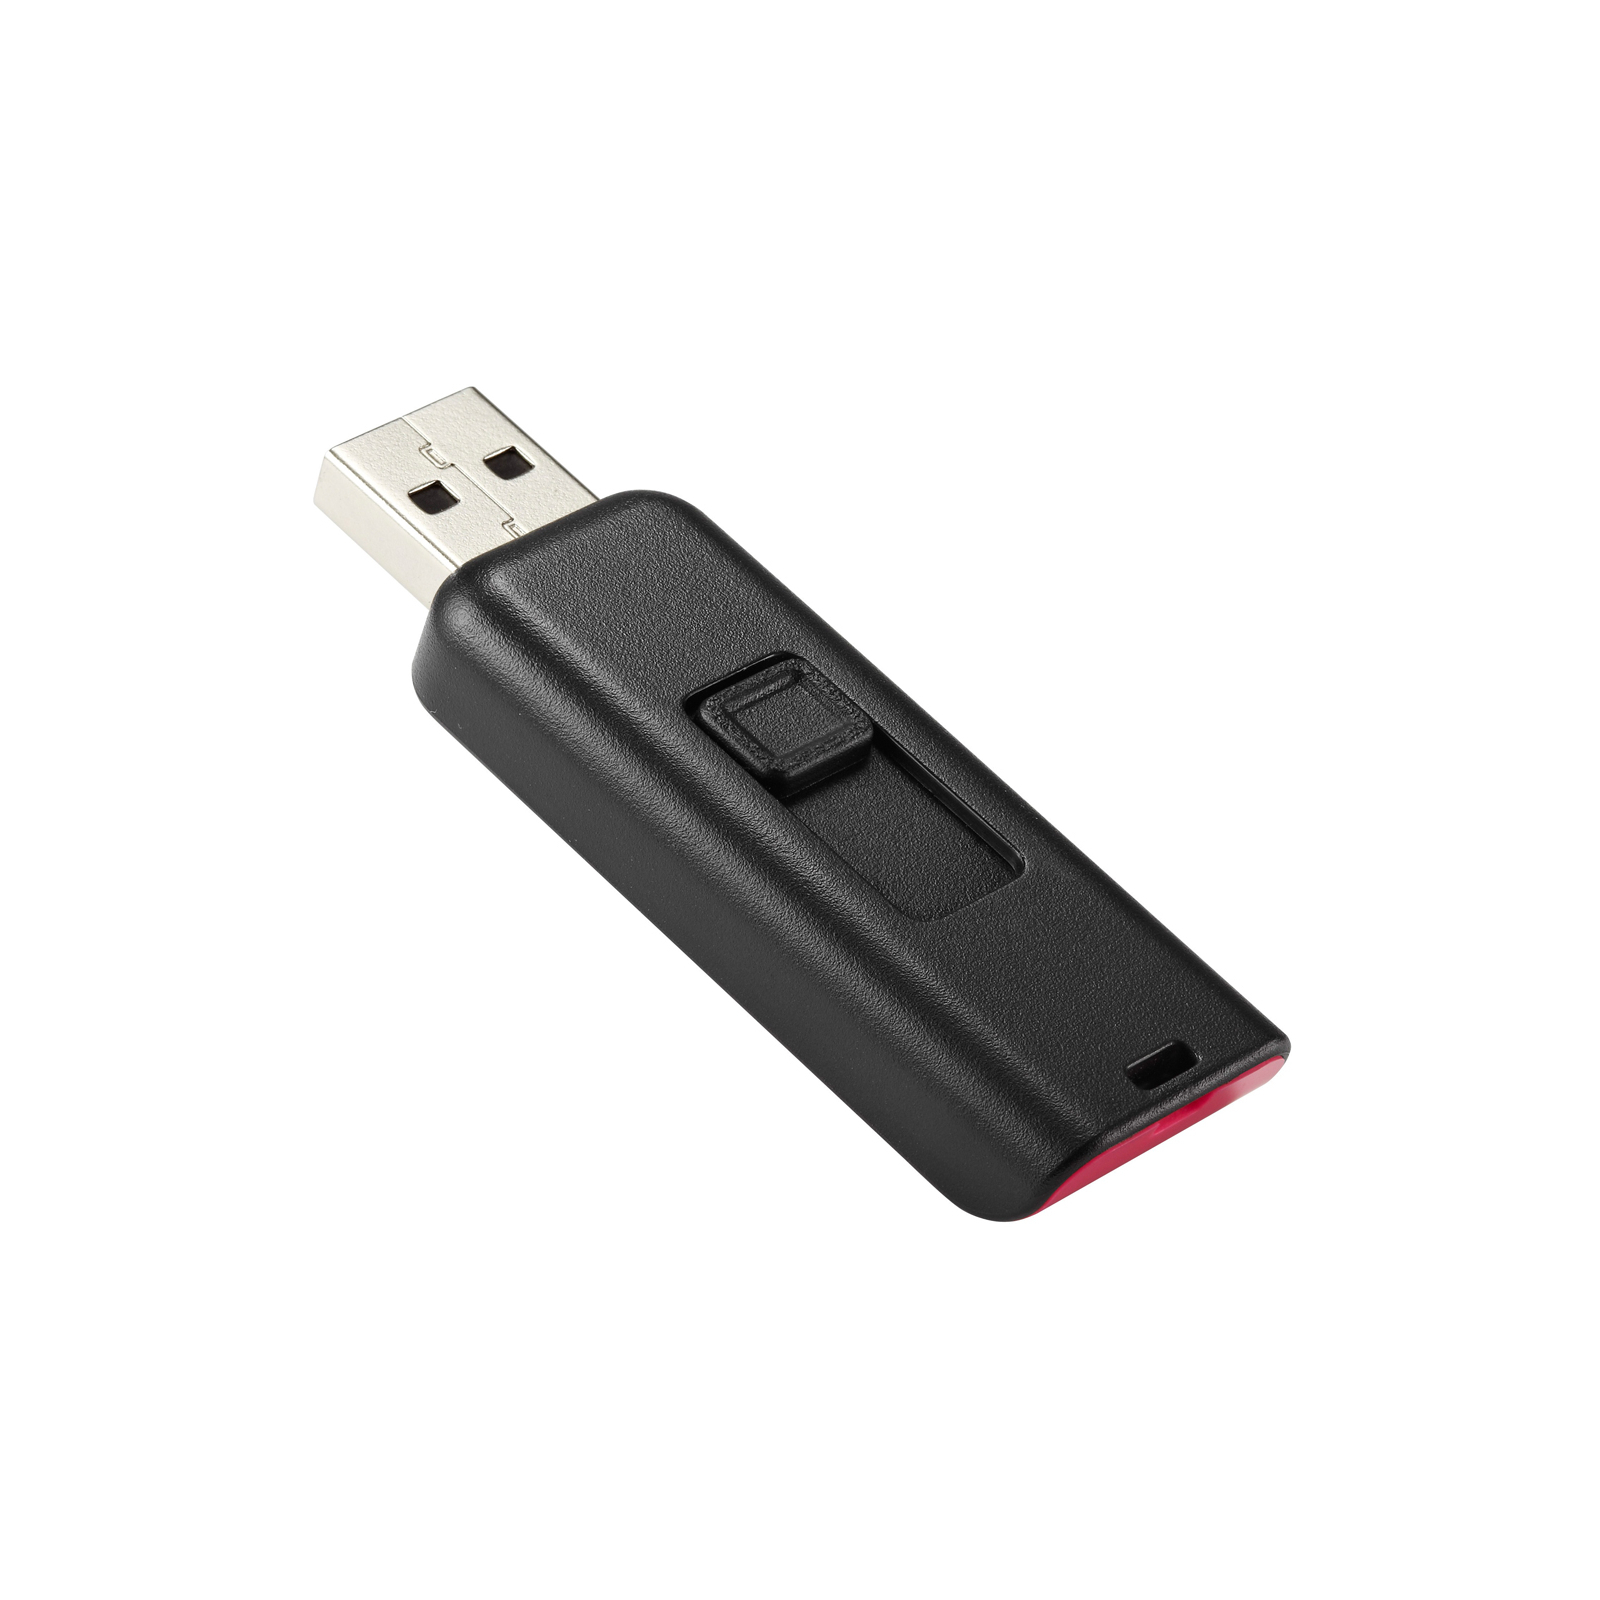 USB флеш накопичувач Apacer 32GB AH334 blue USB 2.0 (AP32GAH334U-1) зображення 5